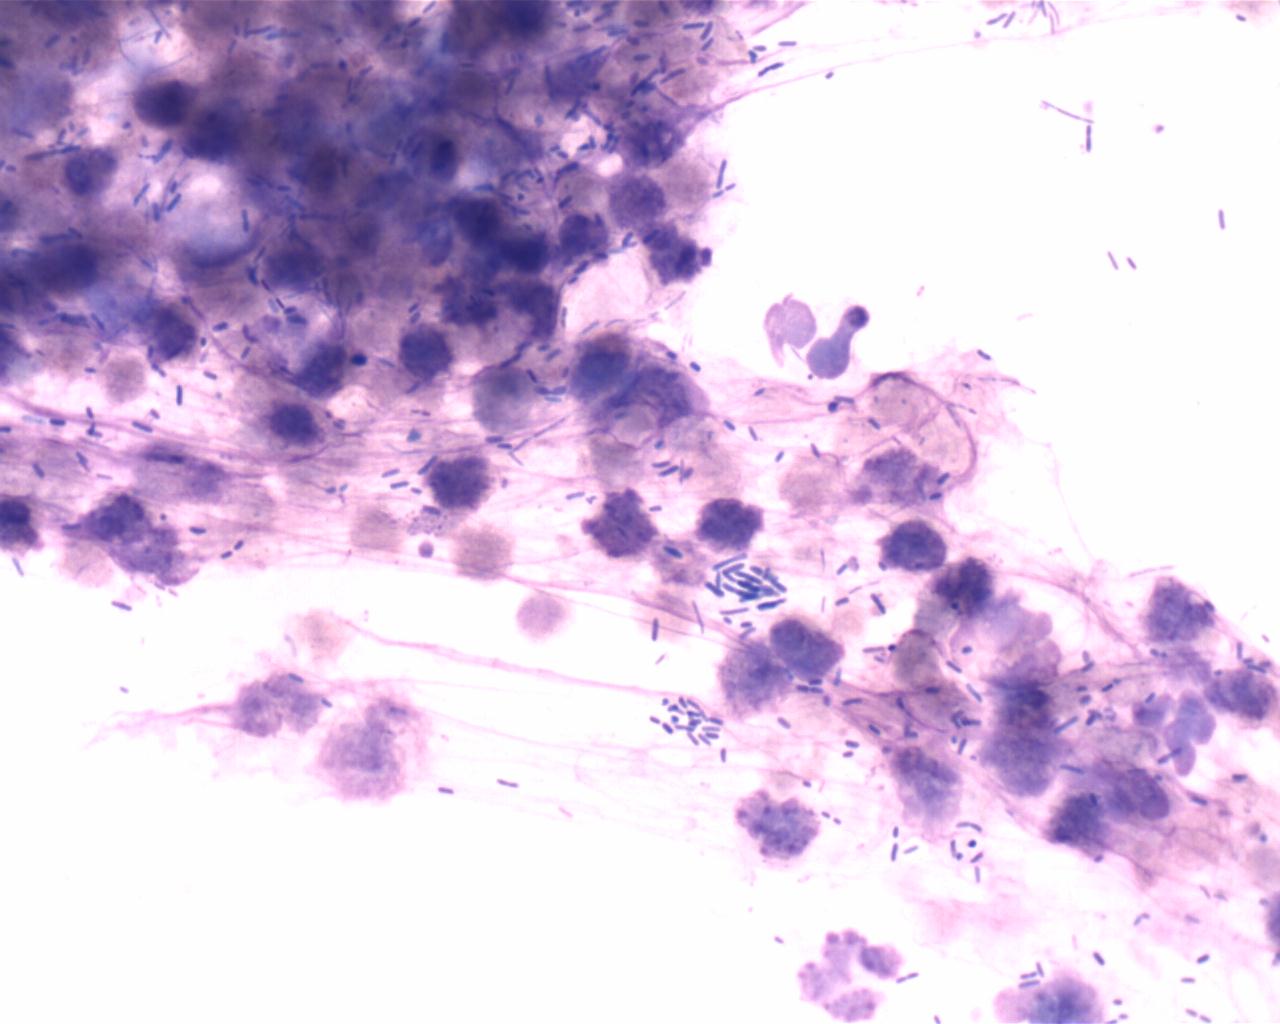 Anidap Cytology Anal Sac Inflammation With Bacteria